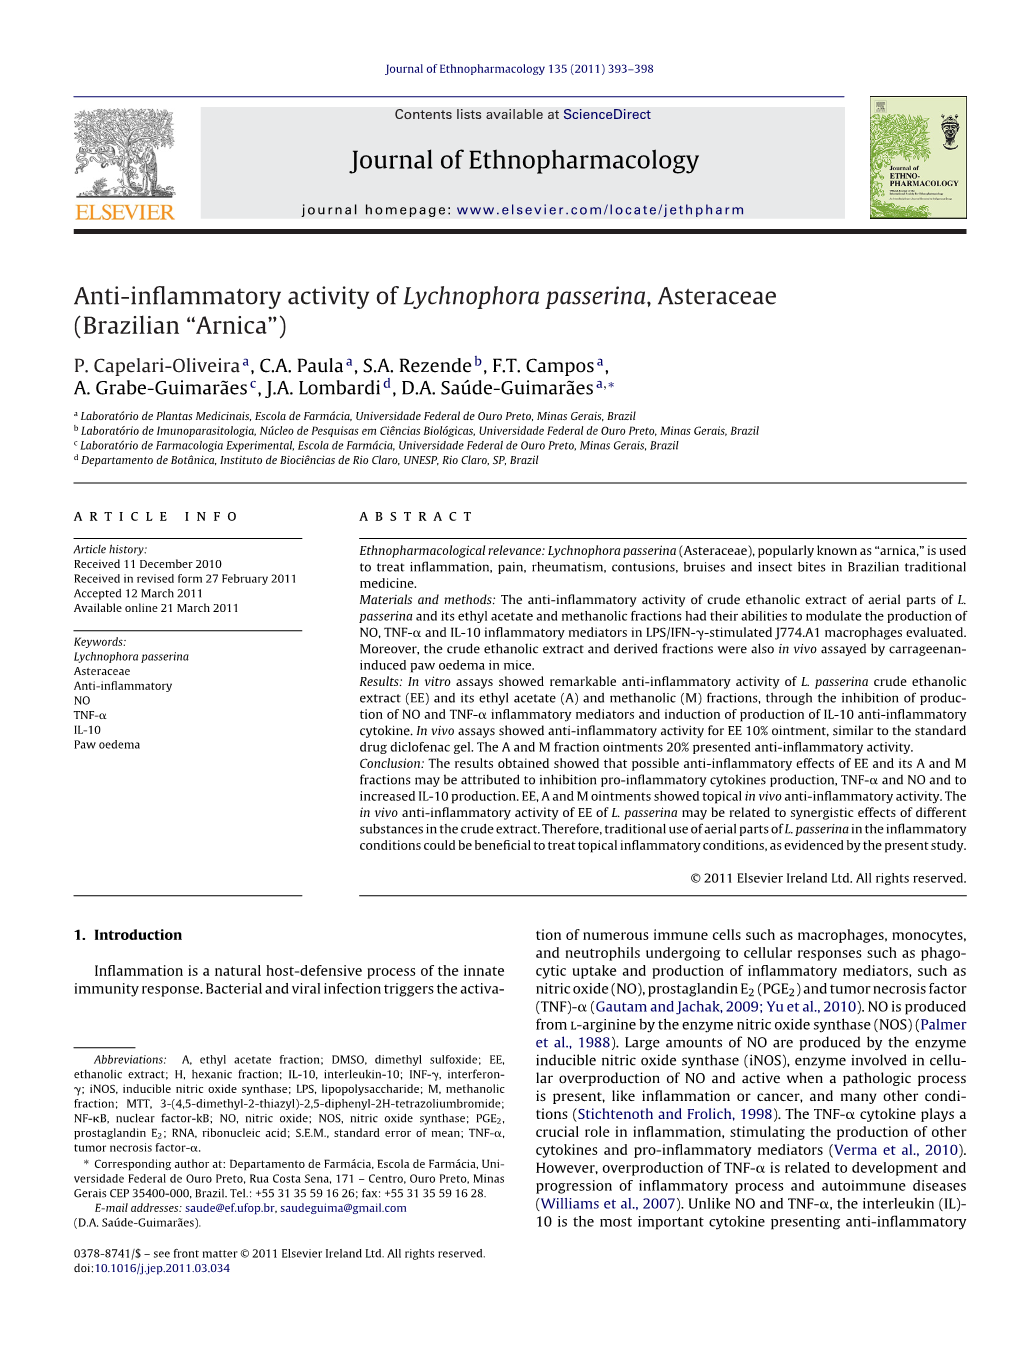 Anti-Inflammatory Activity of Lychnophora Passerina, Asteraceae